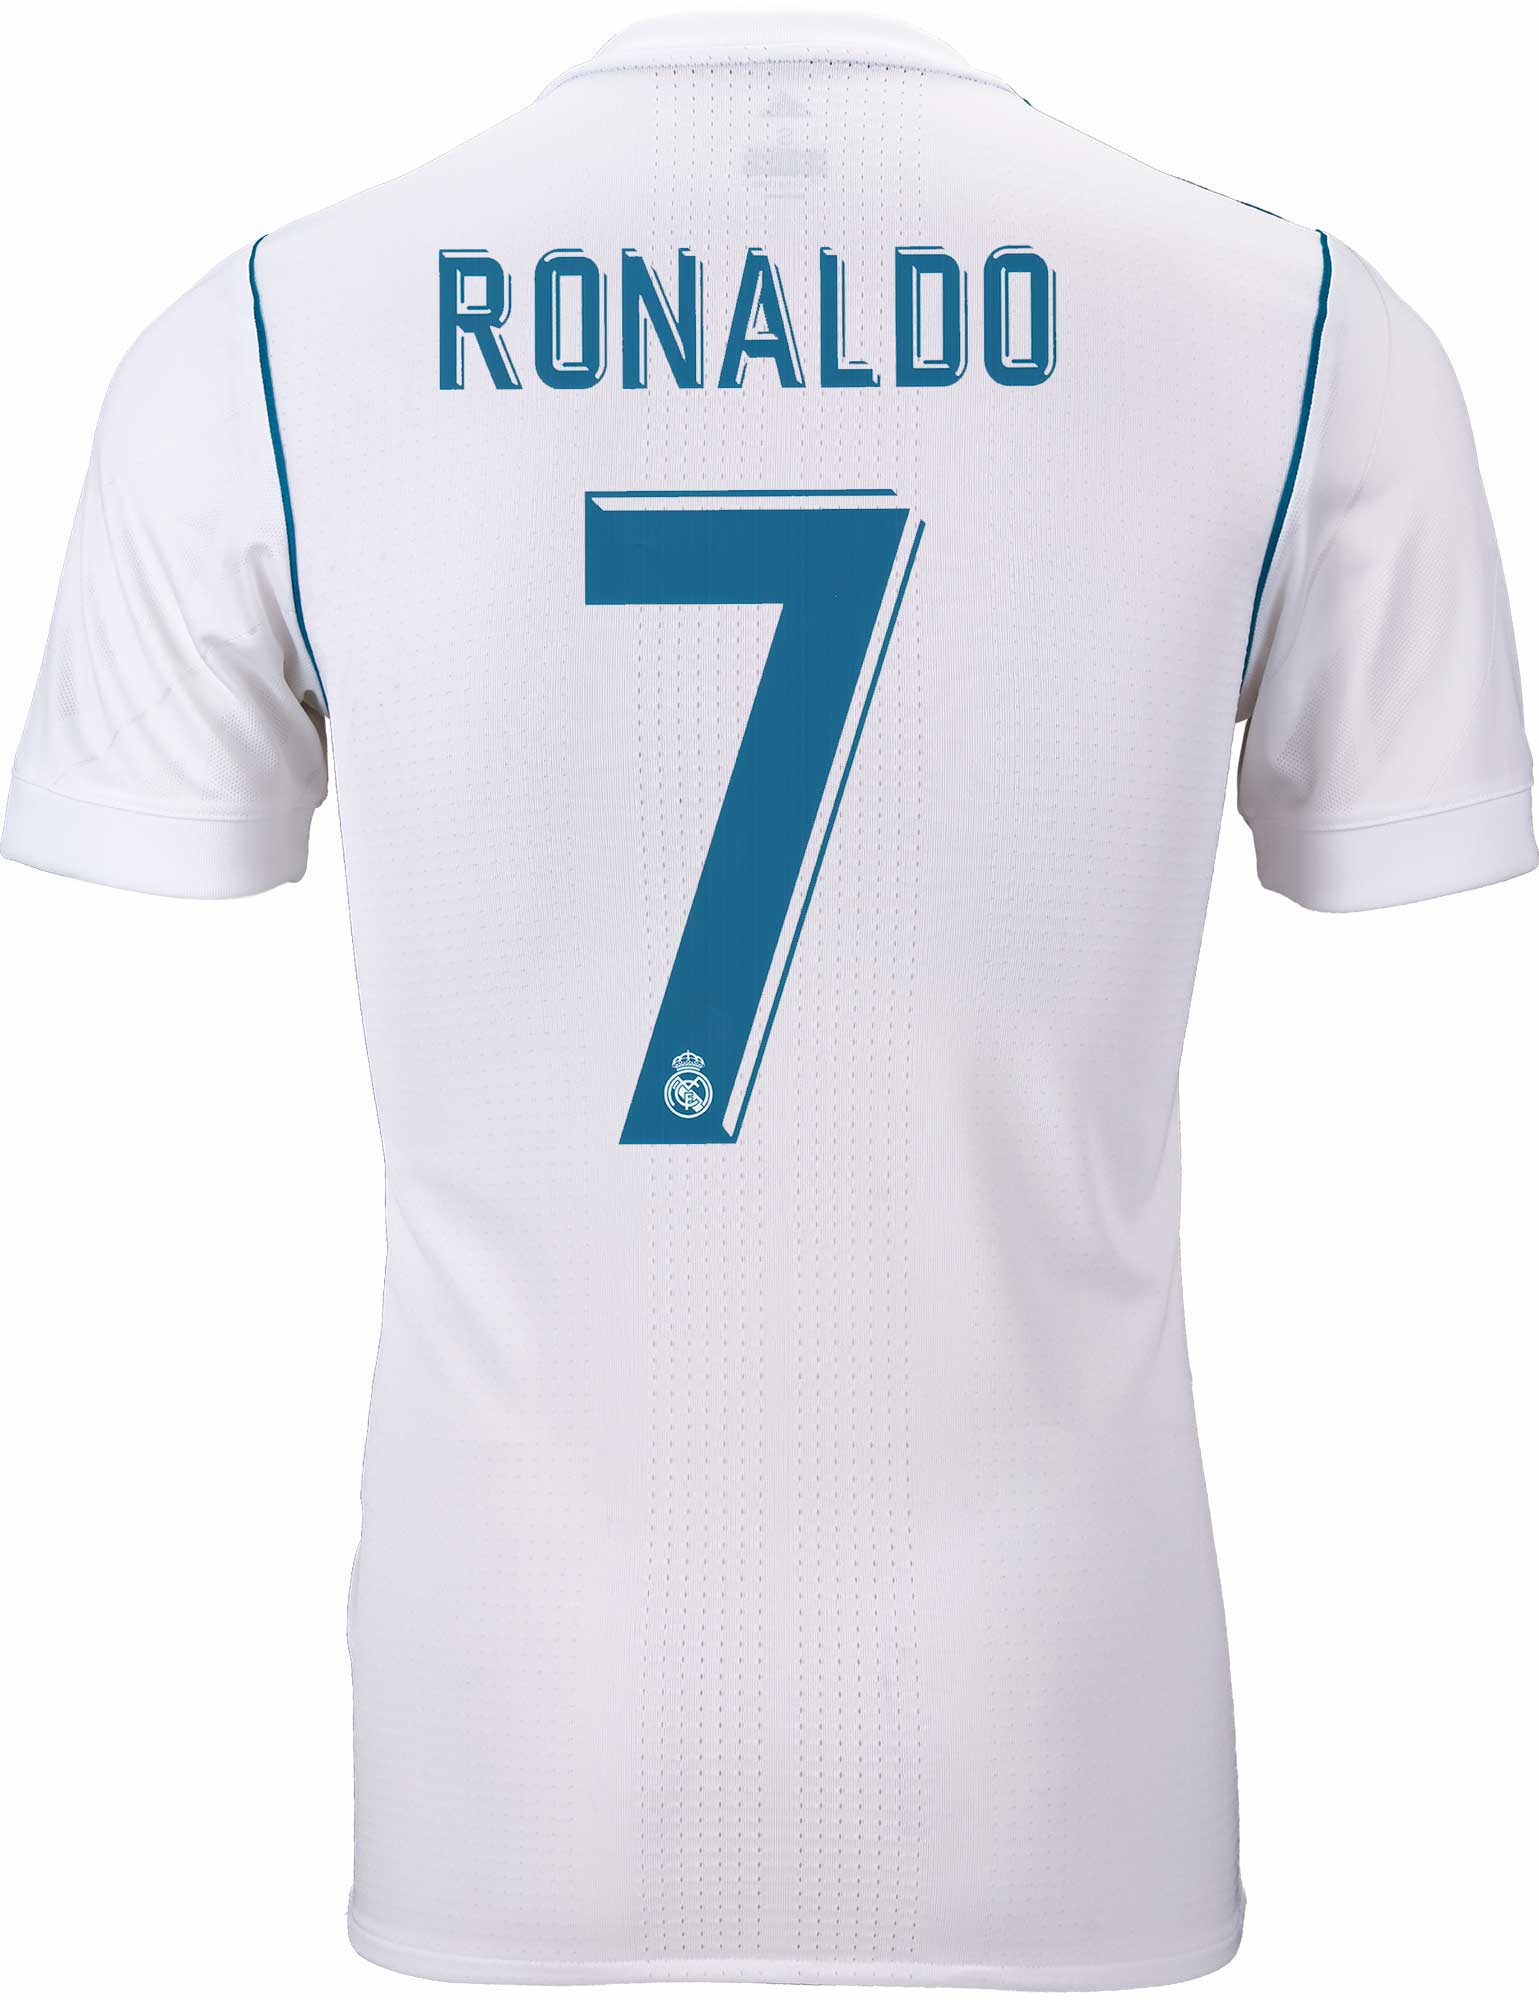 adidas Ronaldo Real Madrid Home Jersey 17-18